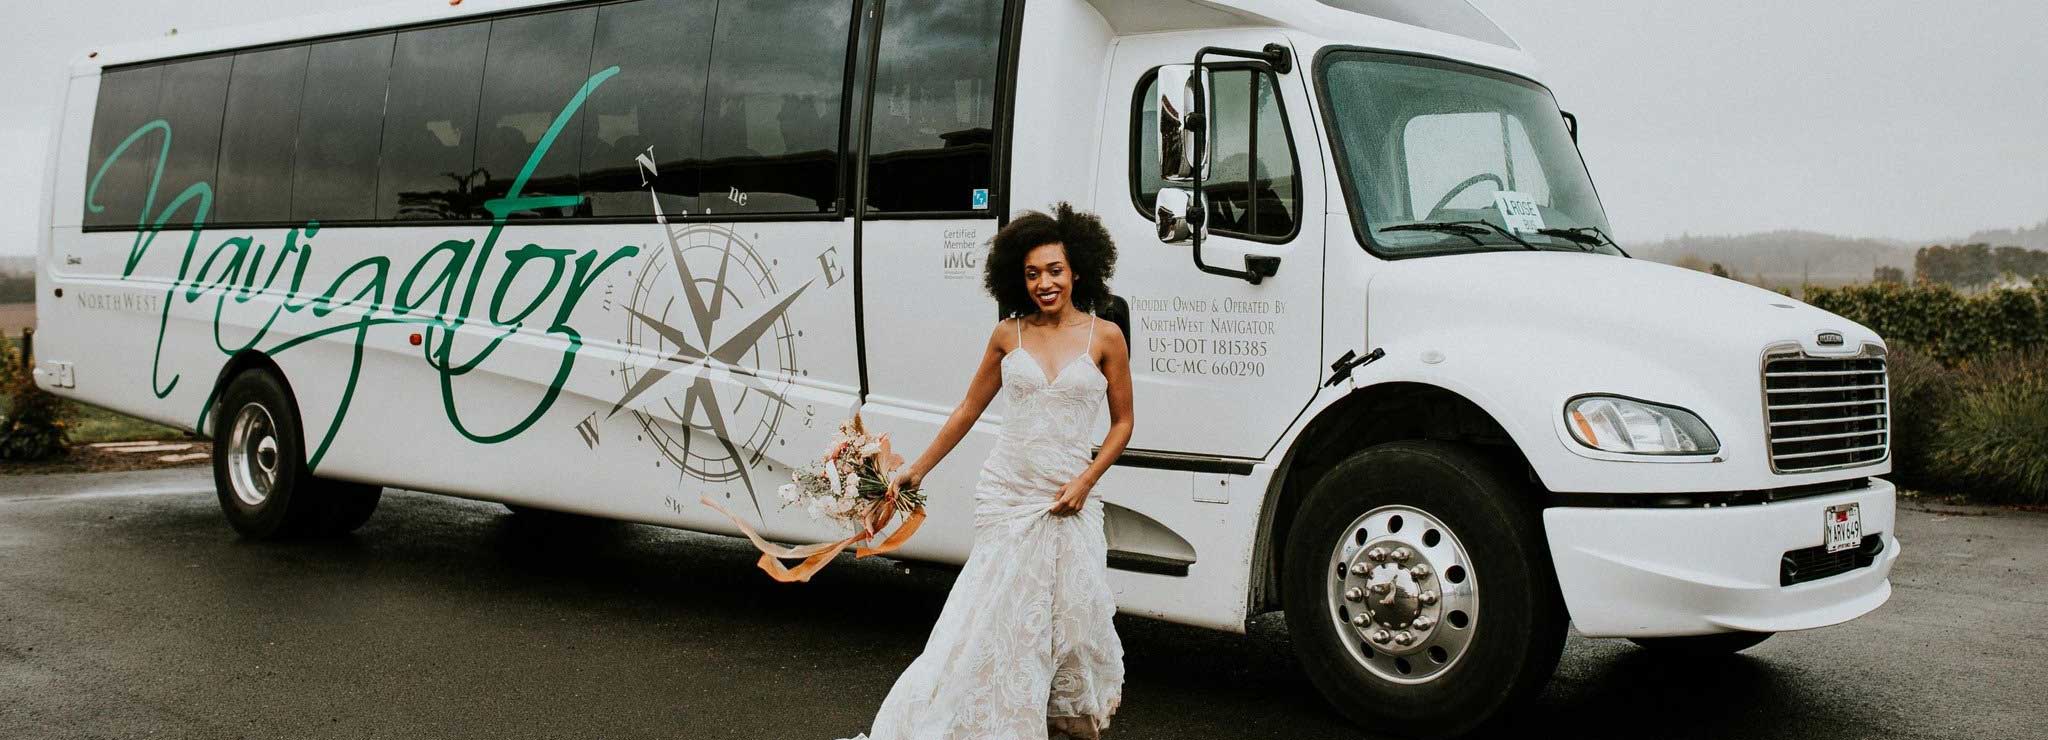 Wedding Shuttle Charter Bus Transportation